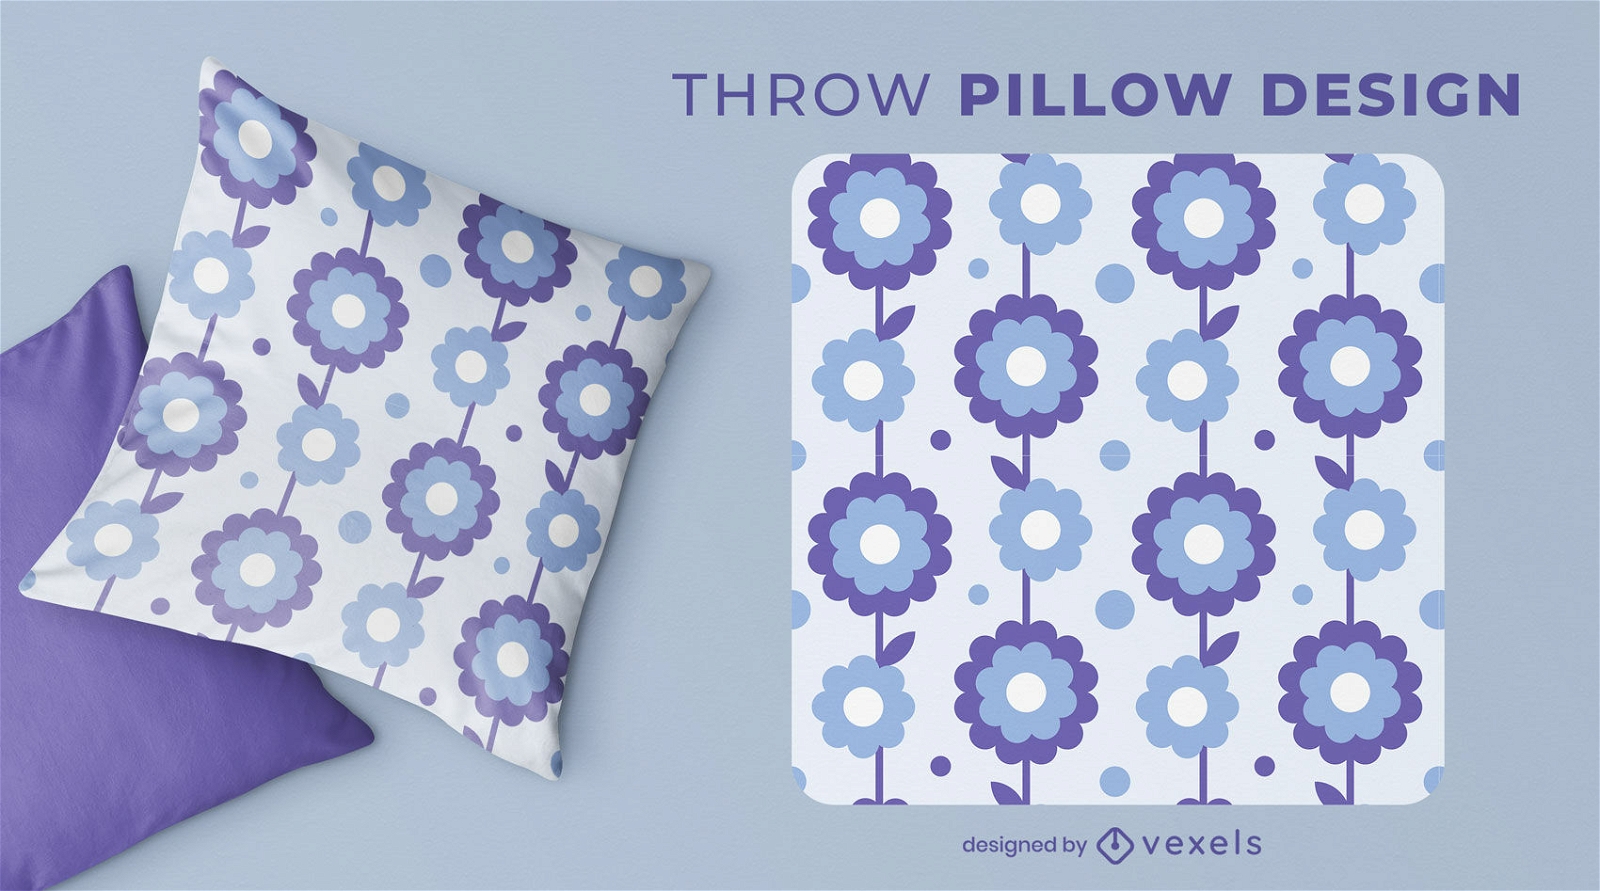 Diseño de almohada retro floral púrpura.